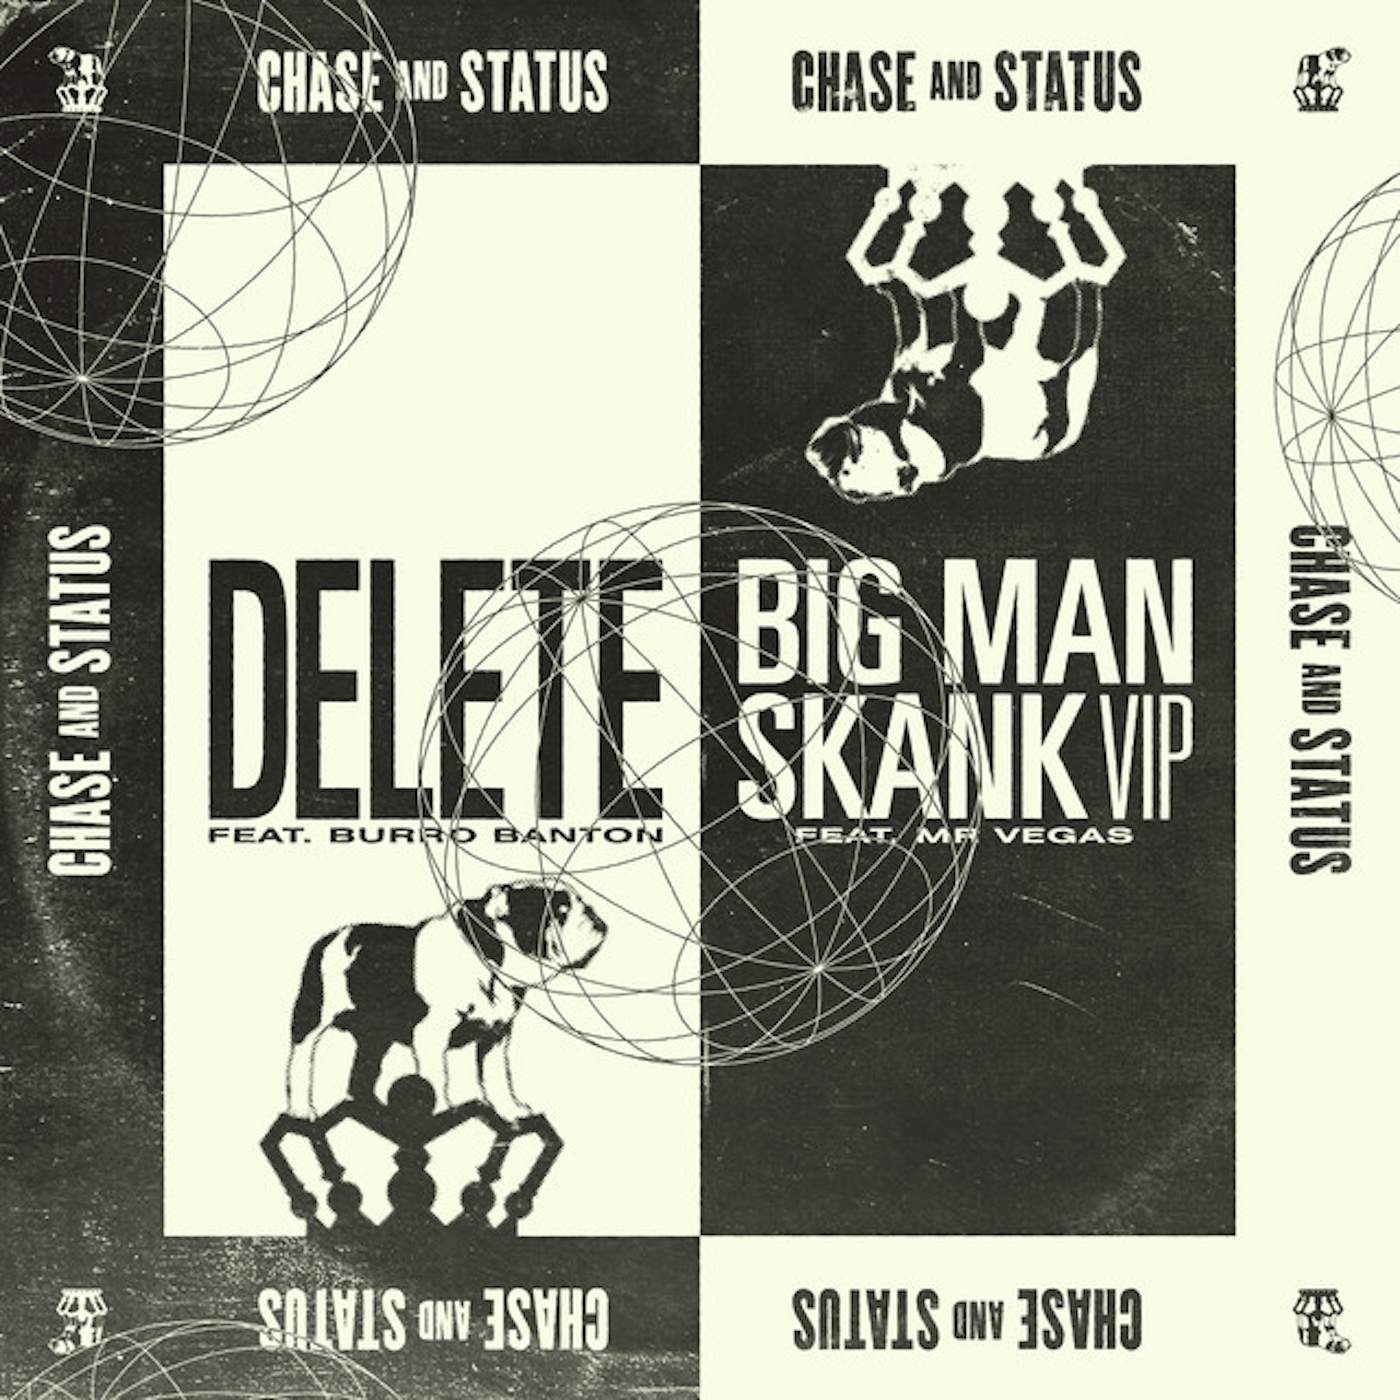 Chase & Status Delete / Big Man Skank (VIP) Vinyl Record